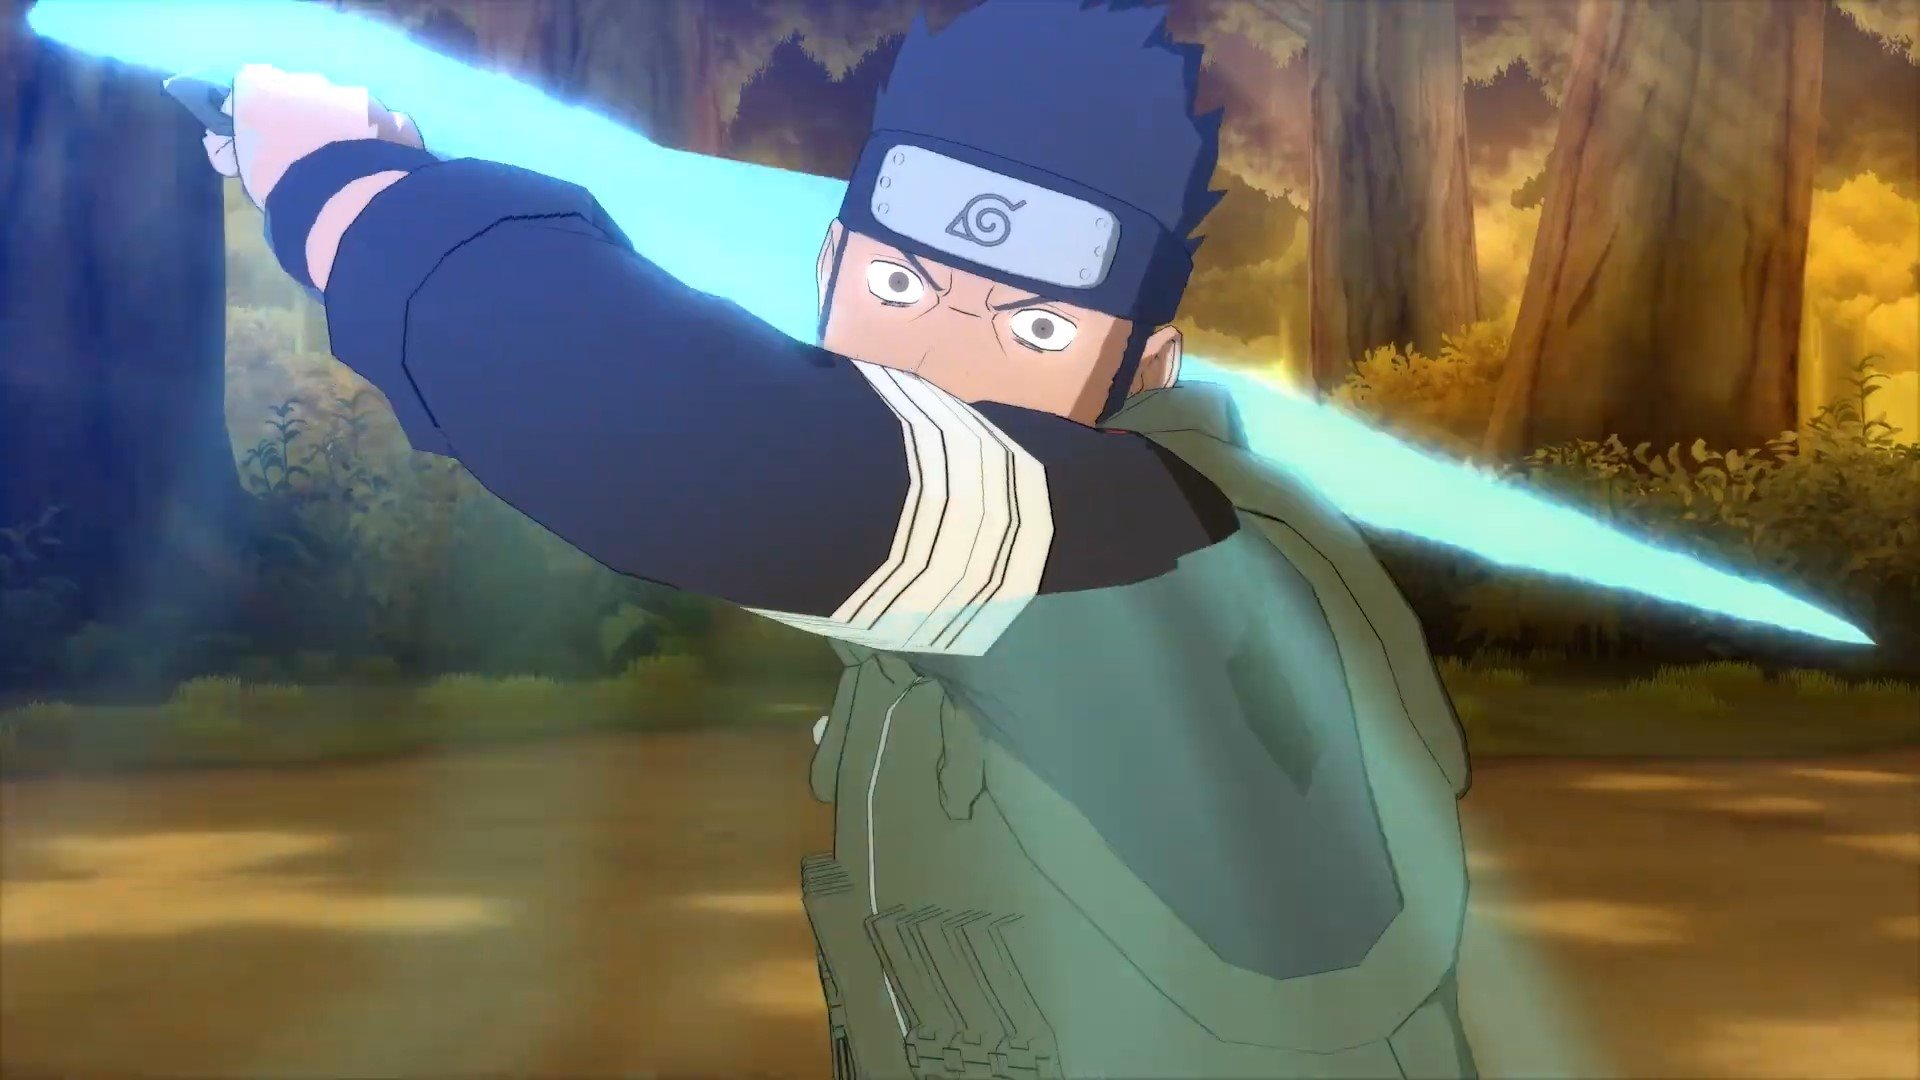 Lançamento de Naruto X Boruto Ultimate Ninja Storm Connections em 2023 para  PS4 e PS5 – PlayStation.Blog BR